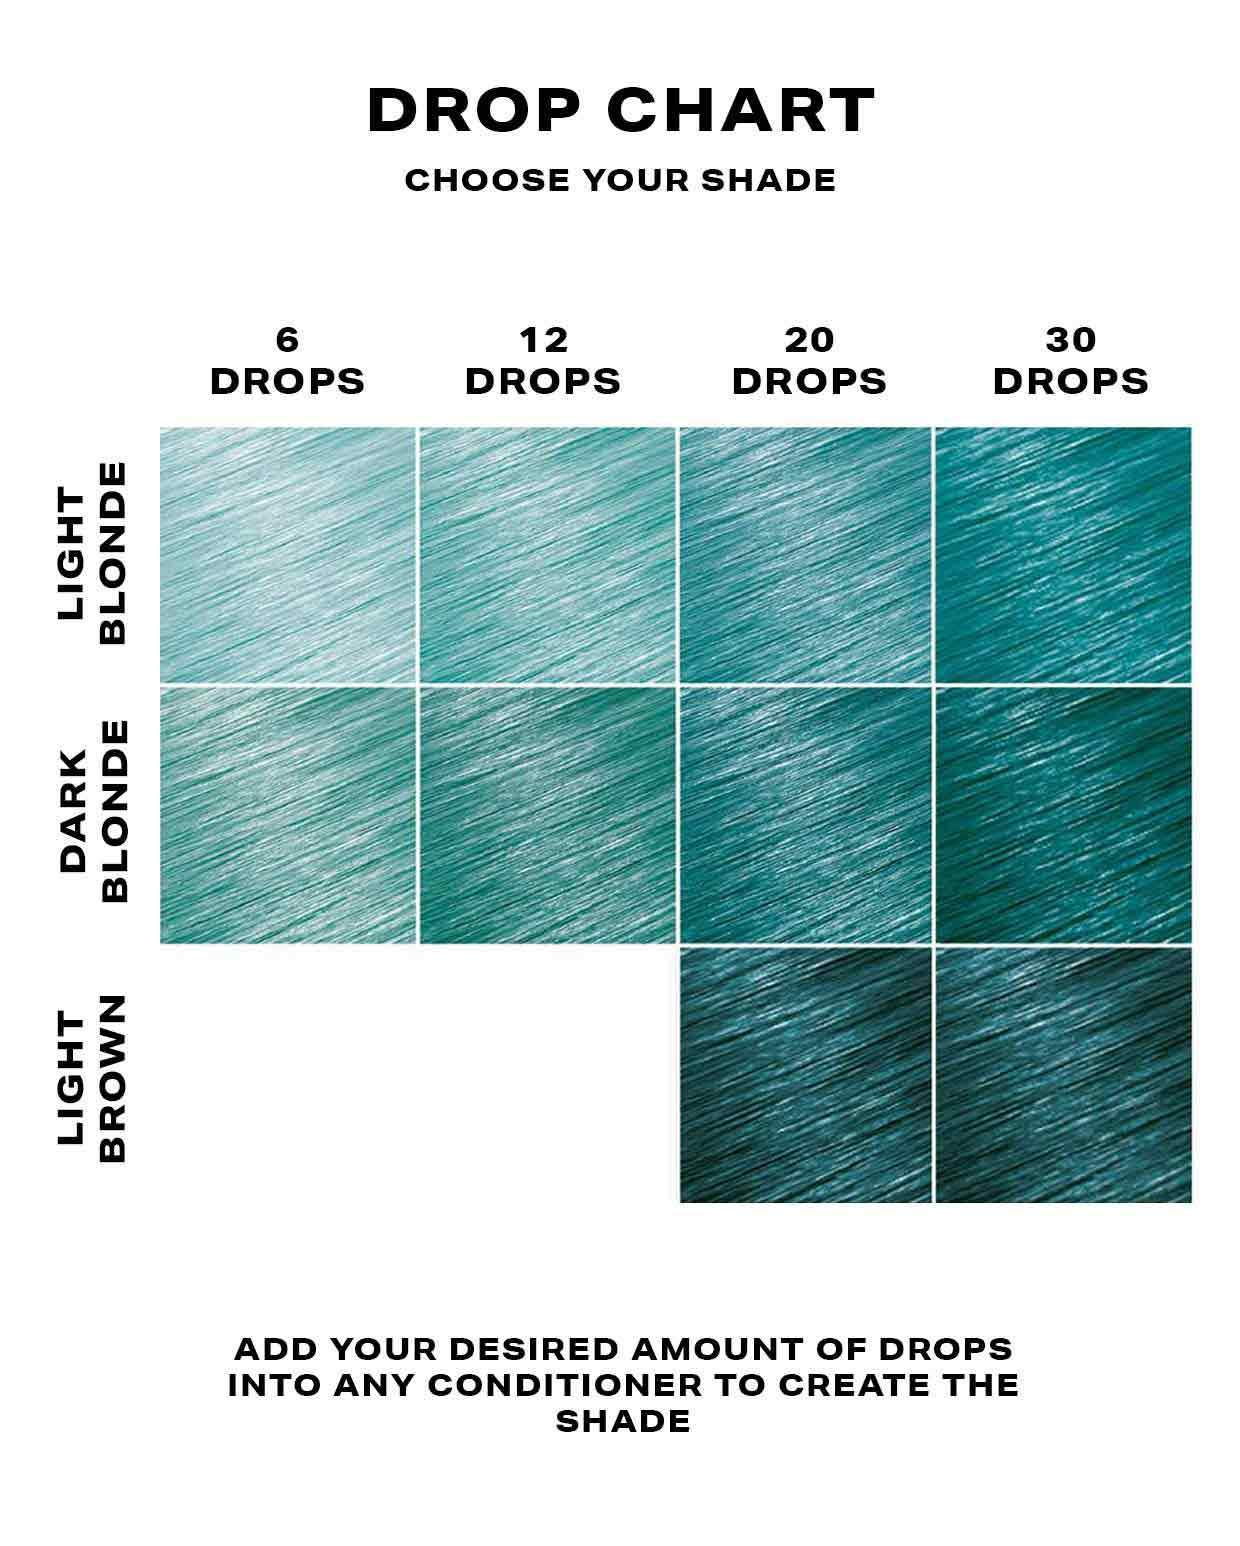 Aqua semi permanent hair dye DROP IT chart